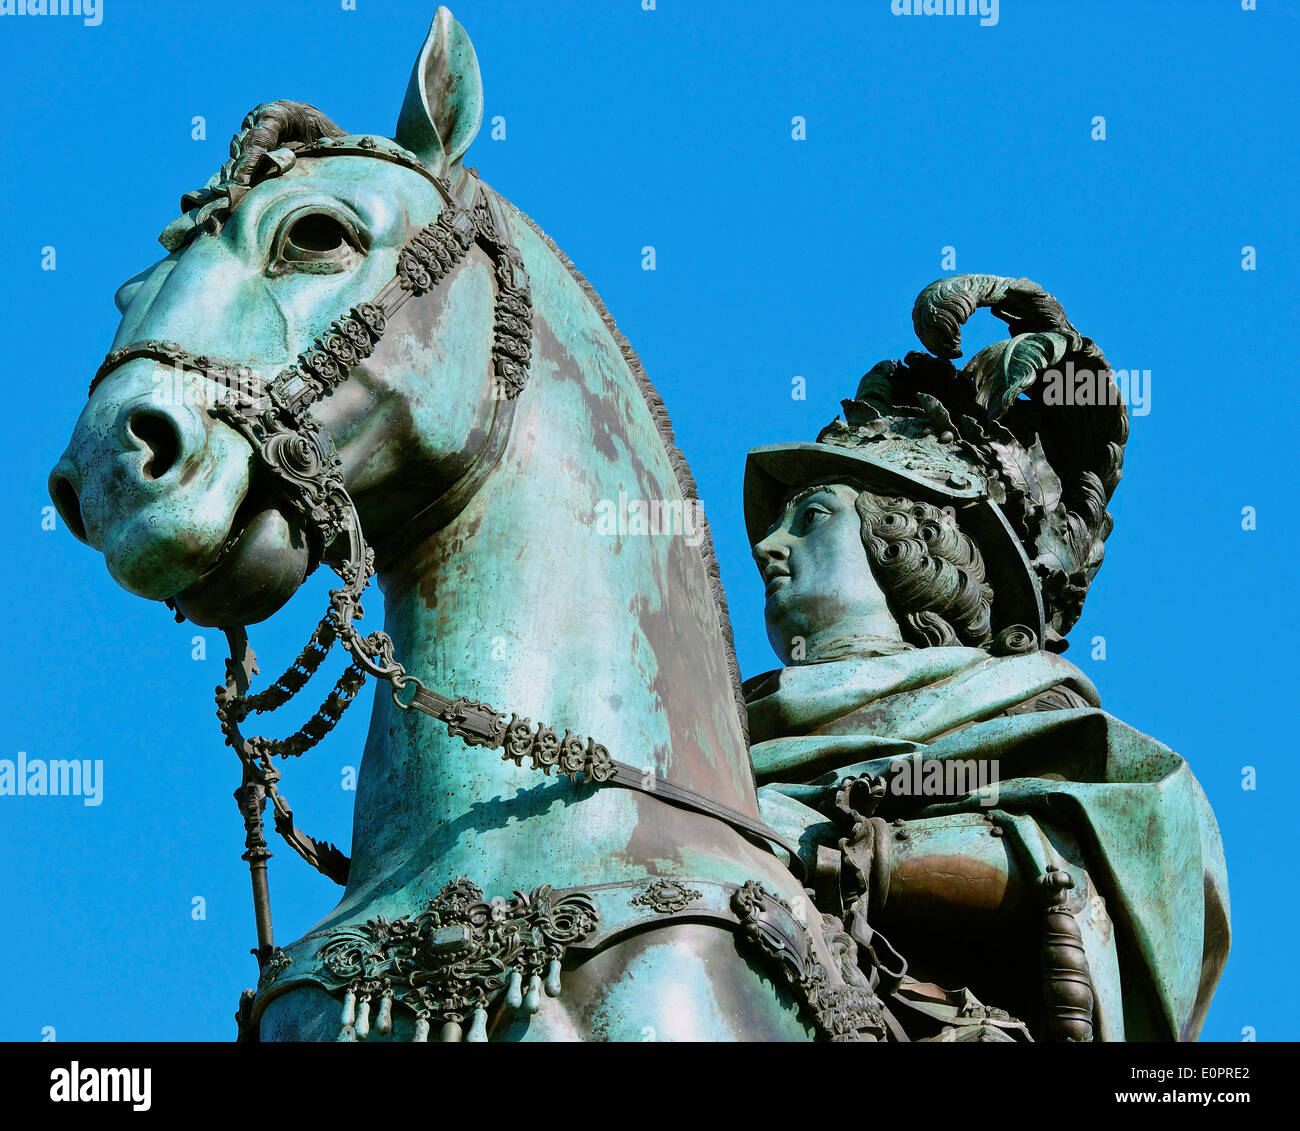 Bronze equestrian statue of Portuguese king Dom Jose 1 by Machado de Castro Praca do Comercio Lisbon Portugal western Europe Stock Photo